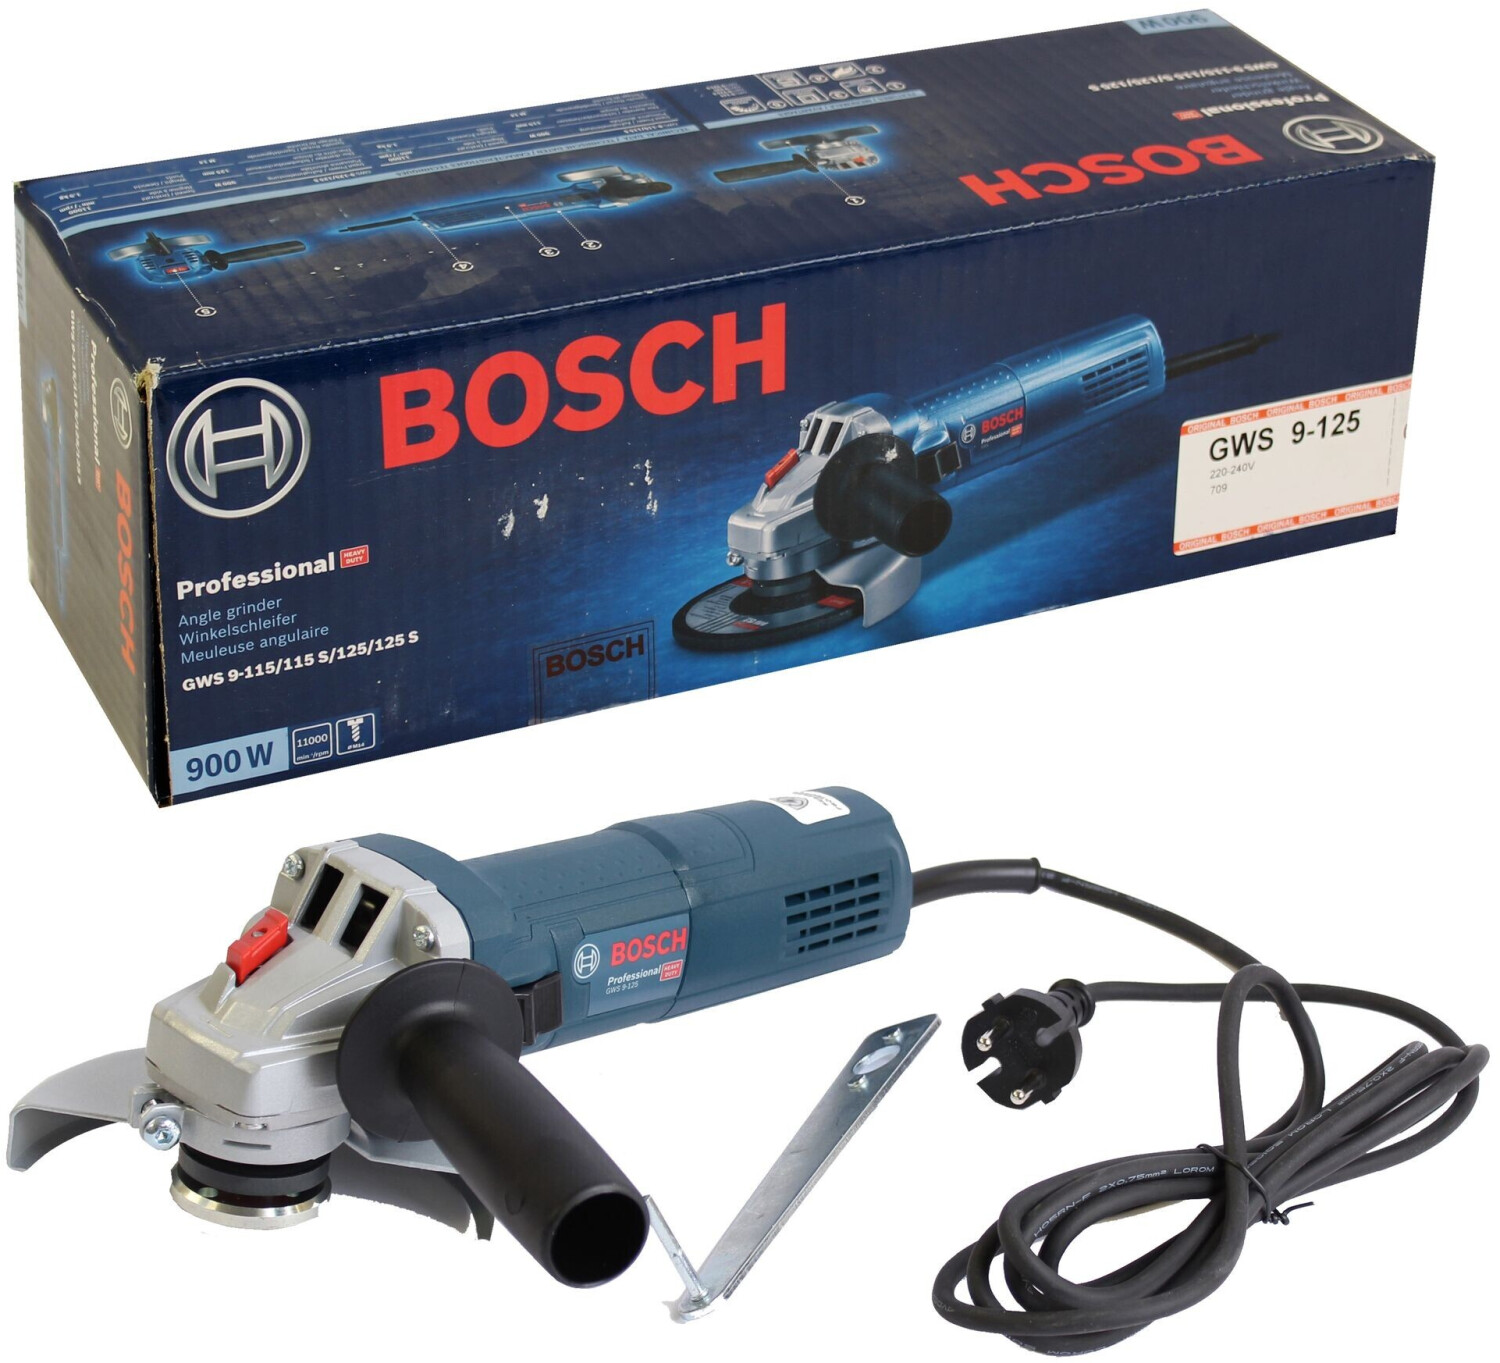 000) Preisvergleich Professional 601 Bosch € 791 | (0 GWS ab 9-125 bei 119,99